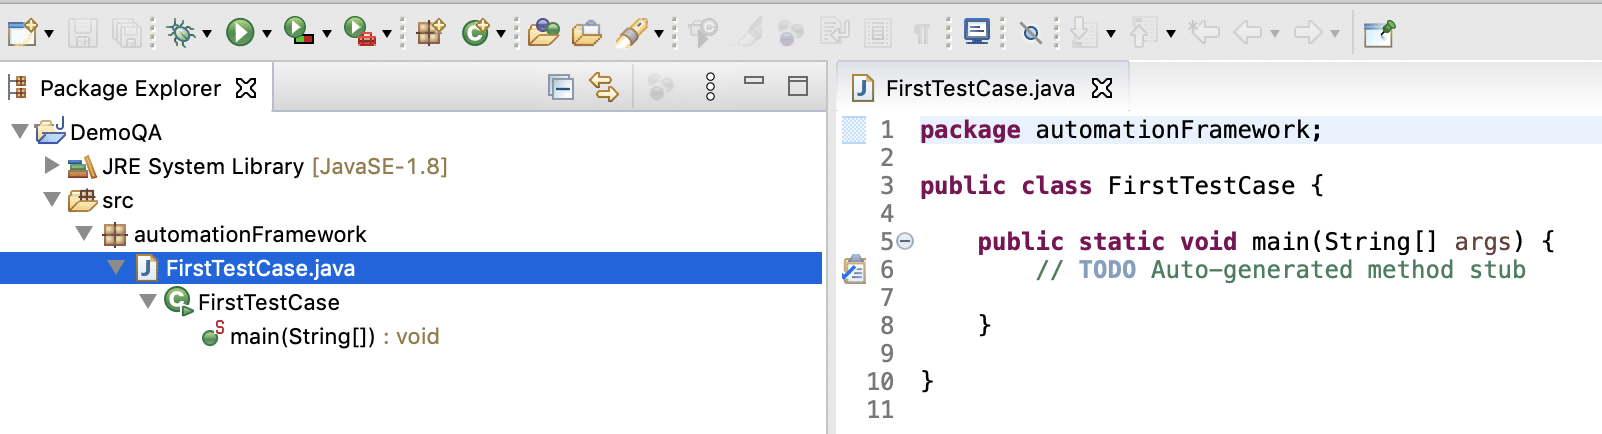 Java class under Project Explorer window